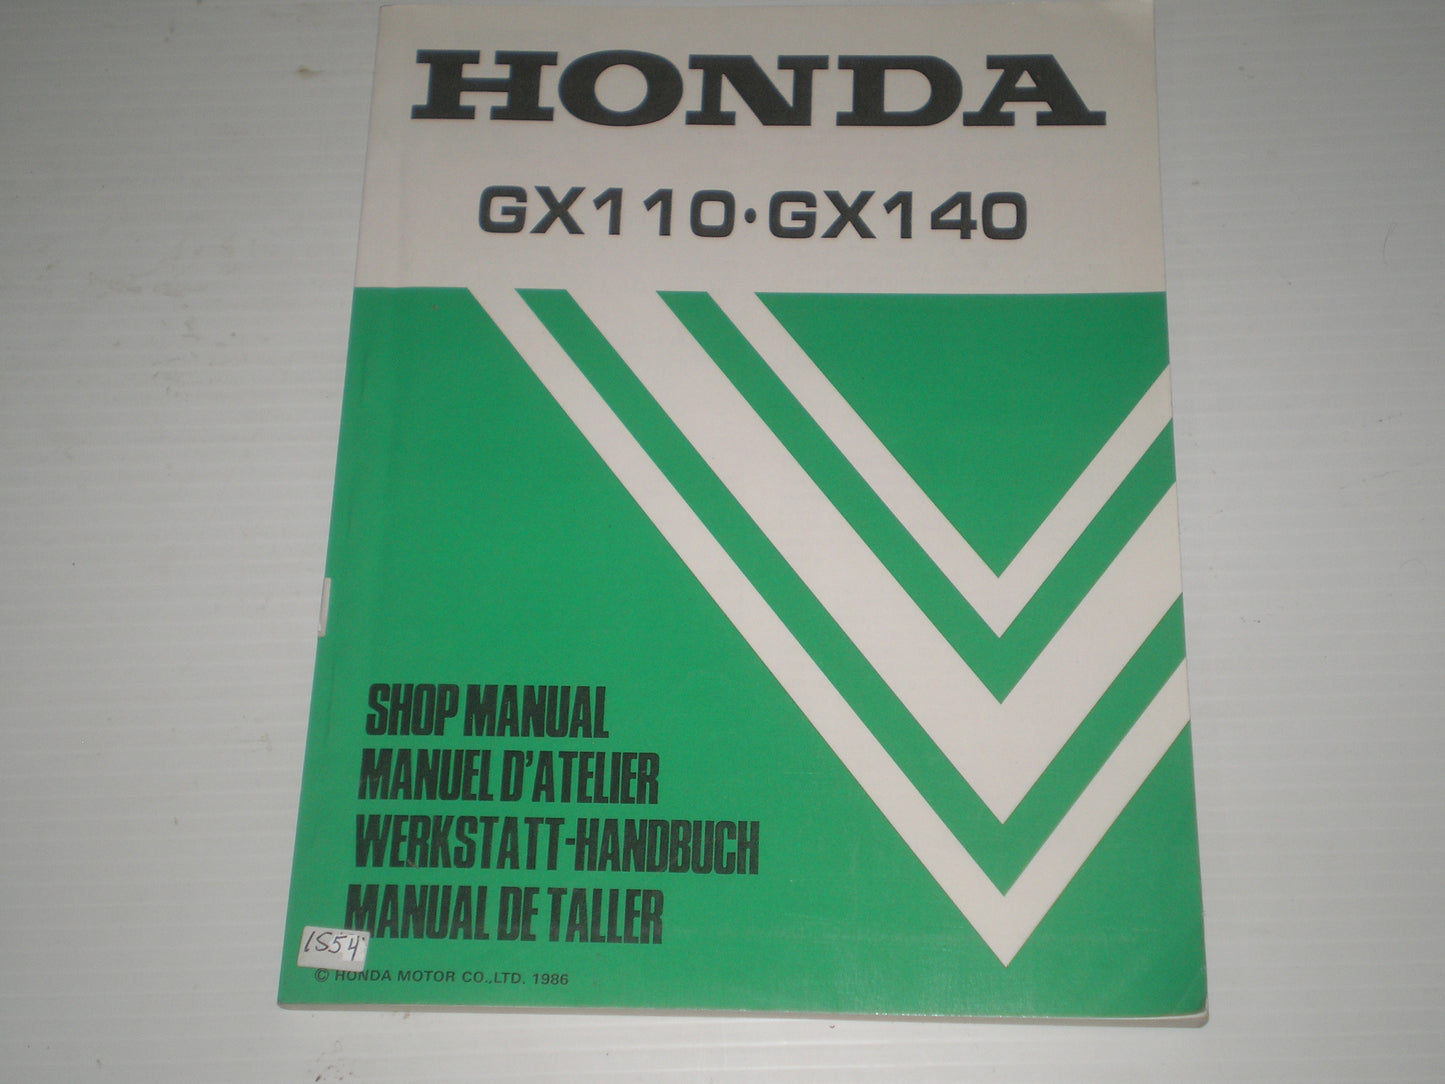 HONDA GX110  GX140  1987  Multi Purpose Engines  66ZE011  #862